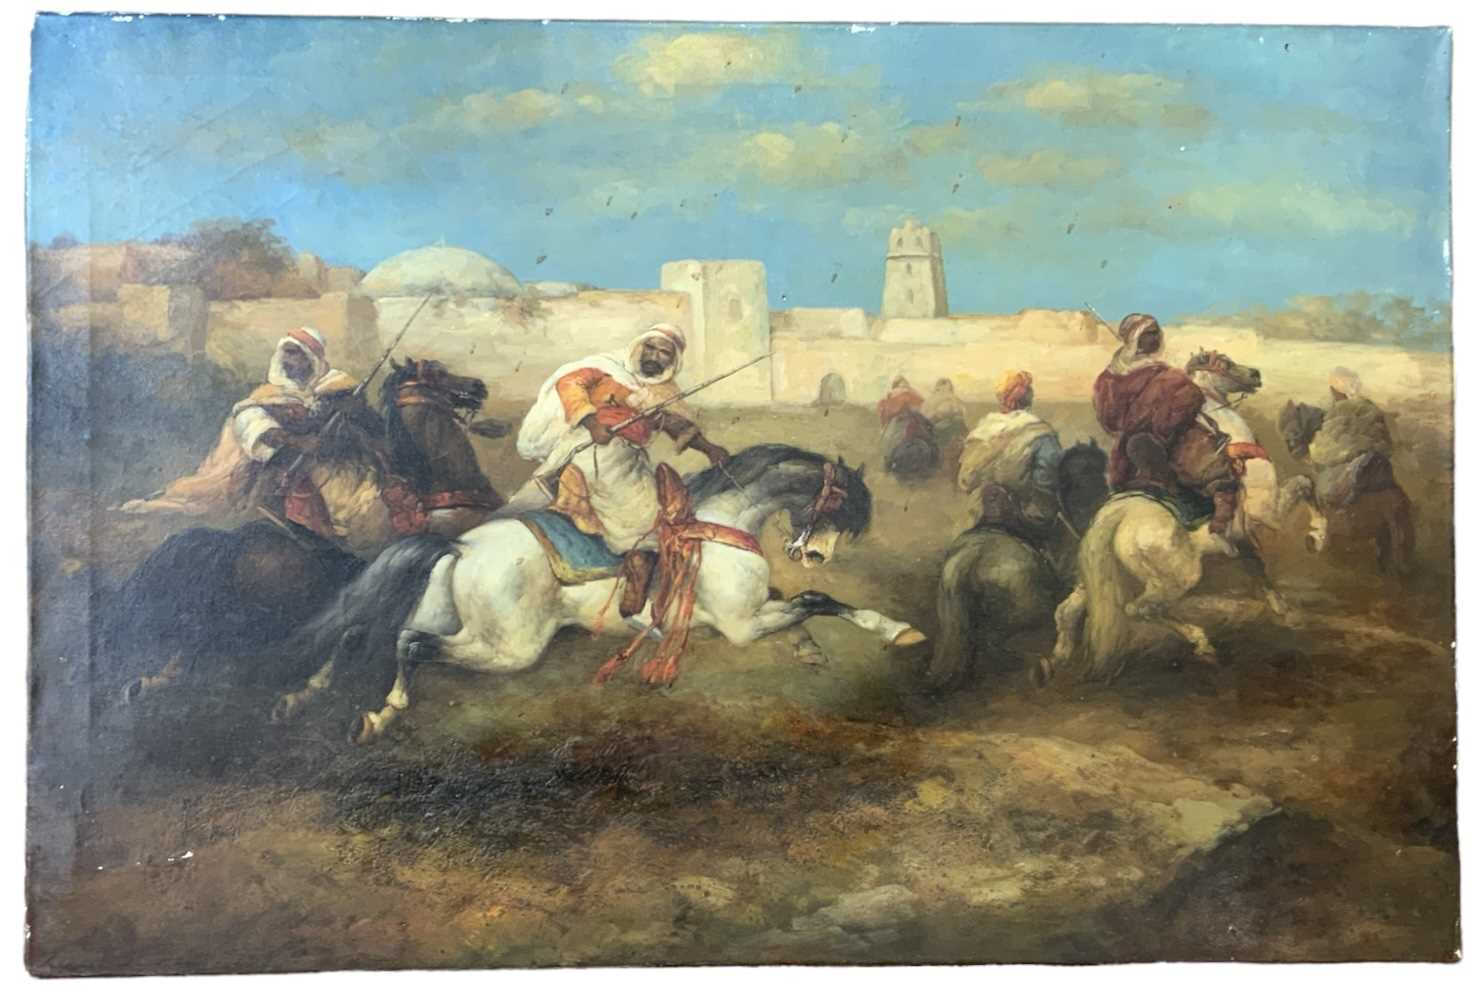 IN THE STYLE OF ADOLPH SCHREYER; oil on board, figures on horseback in battle, 60 x 90cm, unframed.